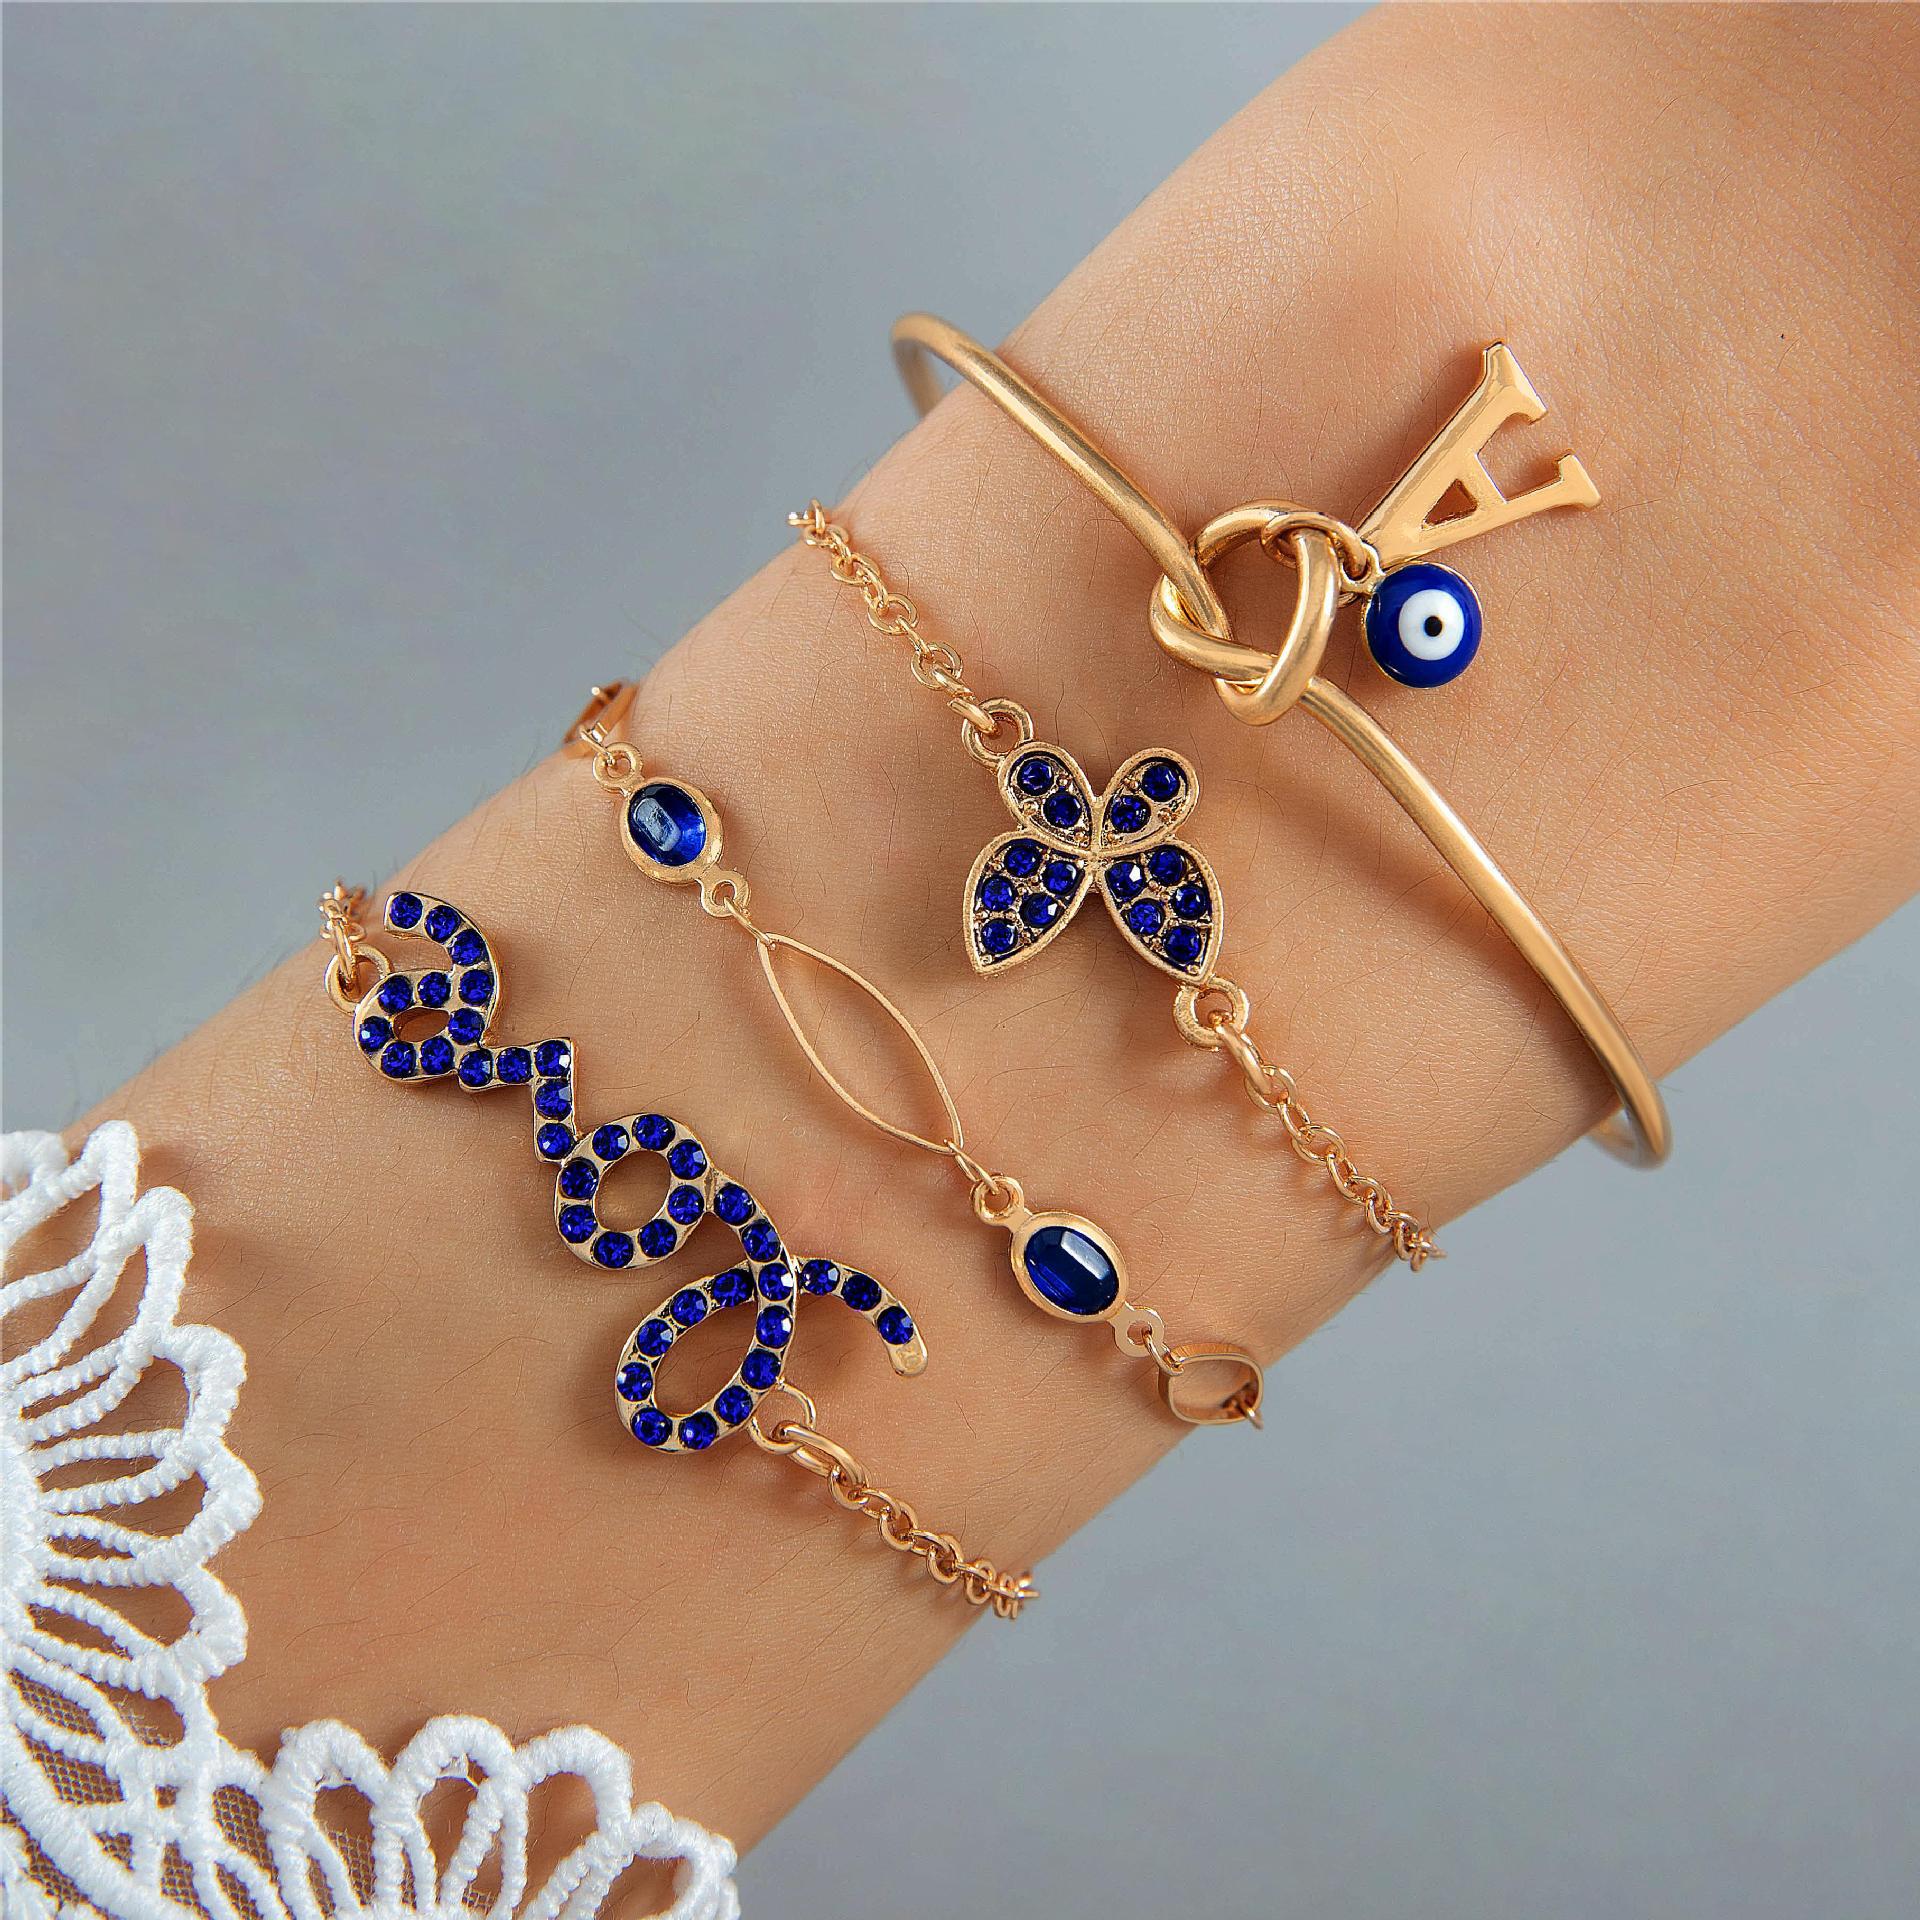 Blue Flower Love Butterfly Bracelet Set: Stylish and Elegant